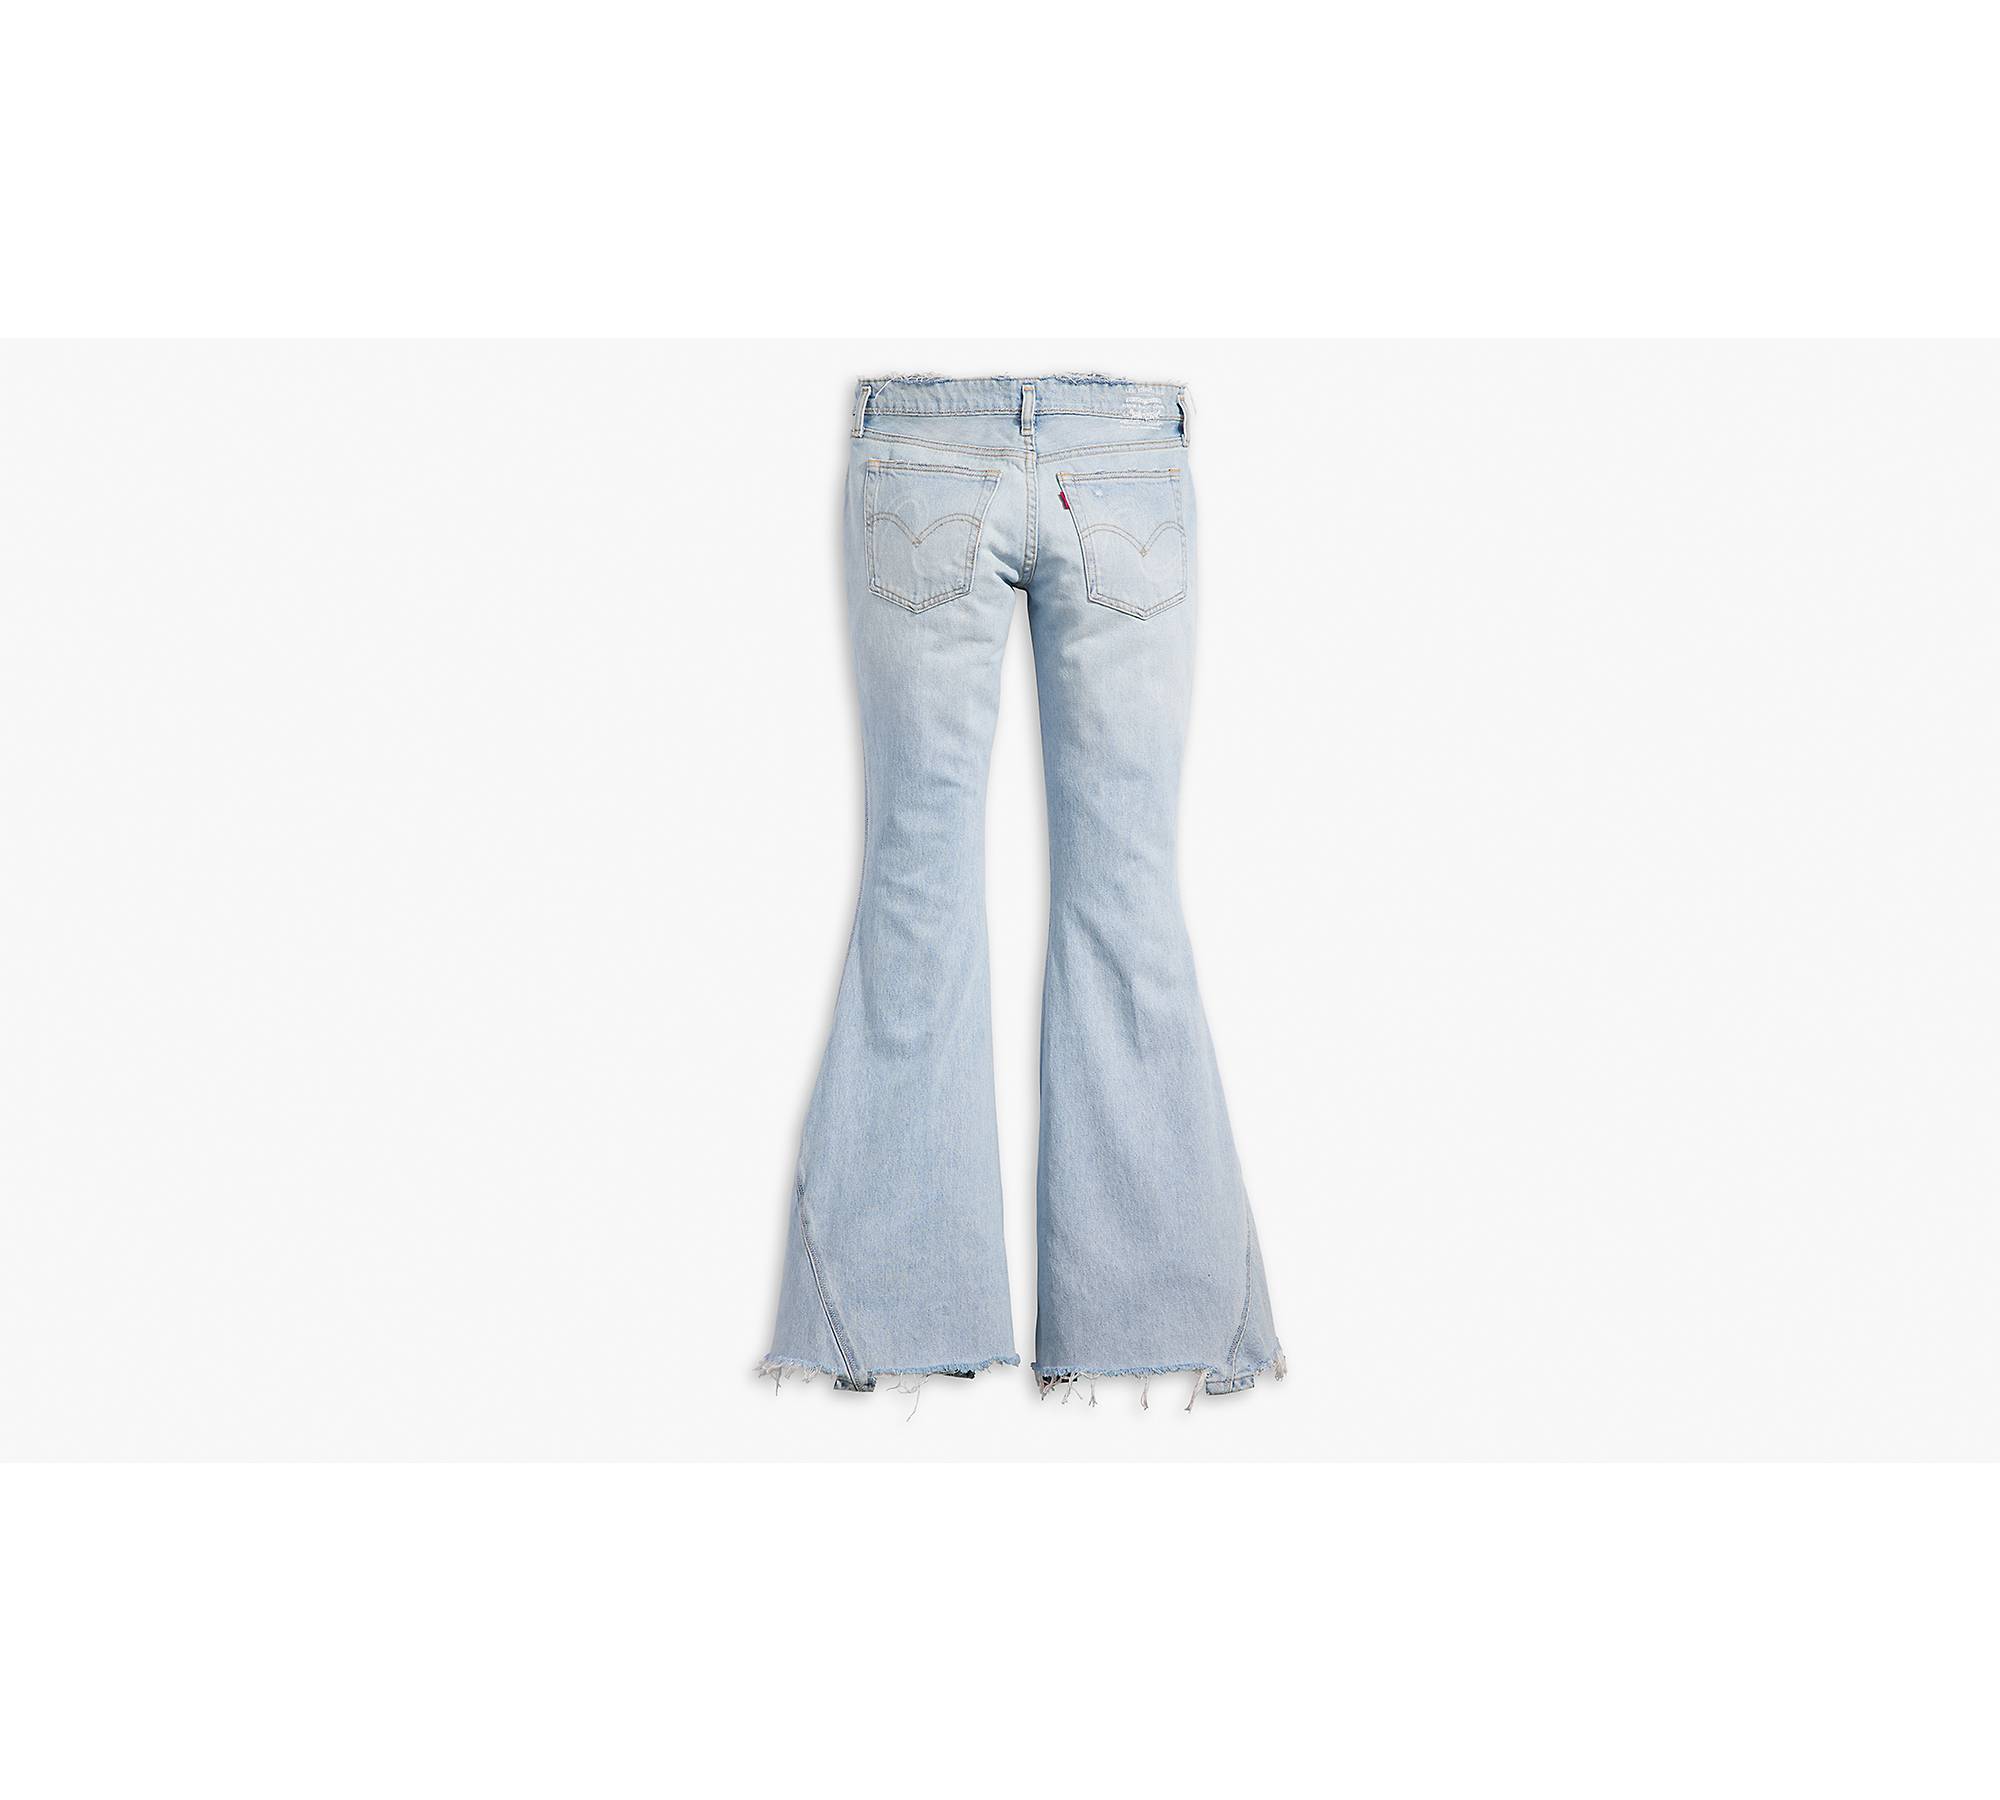  HBER Girls Flared Jeans Kids Bell Bottom Pants Size 8